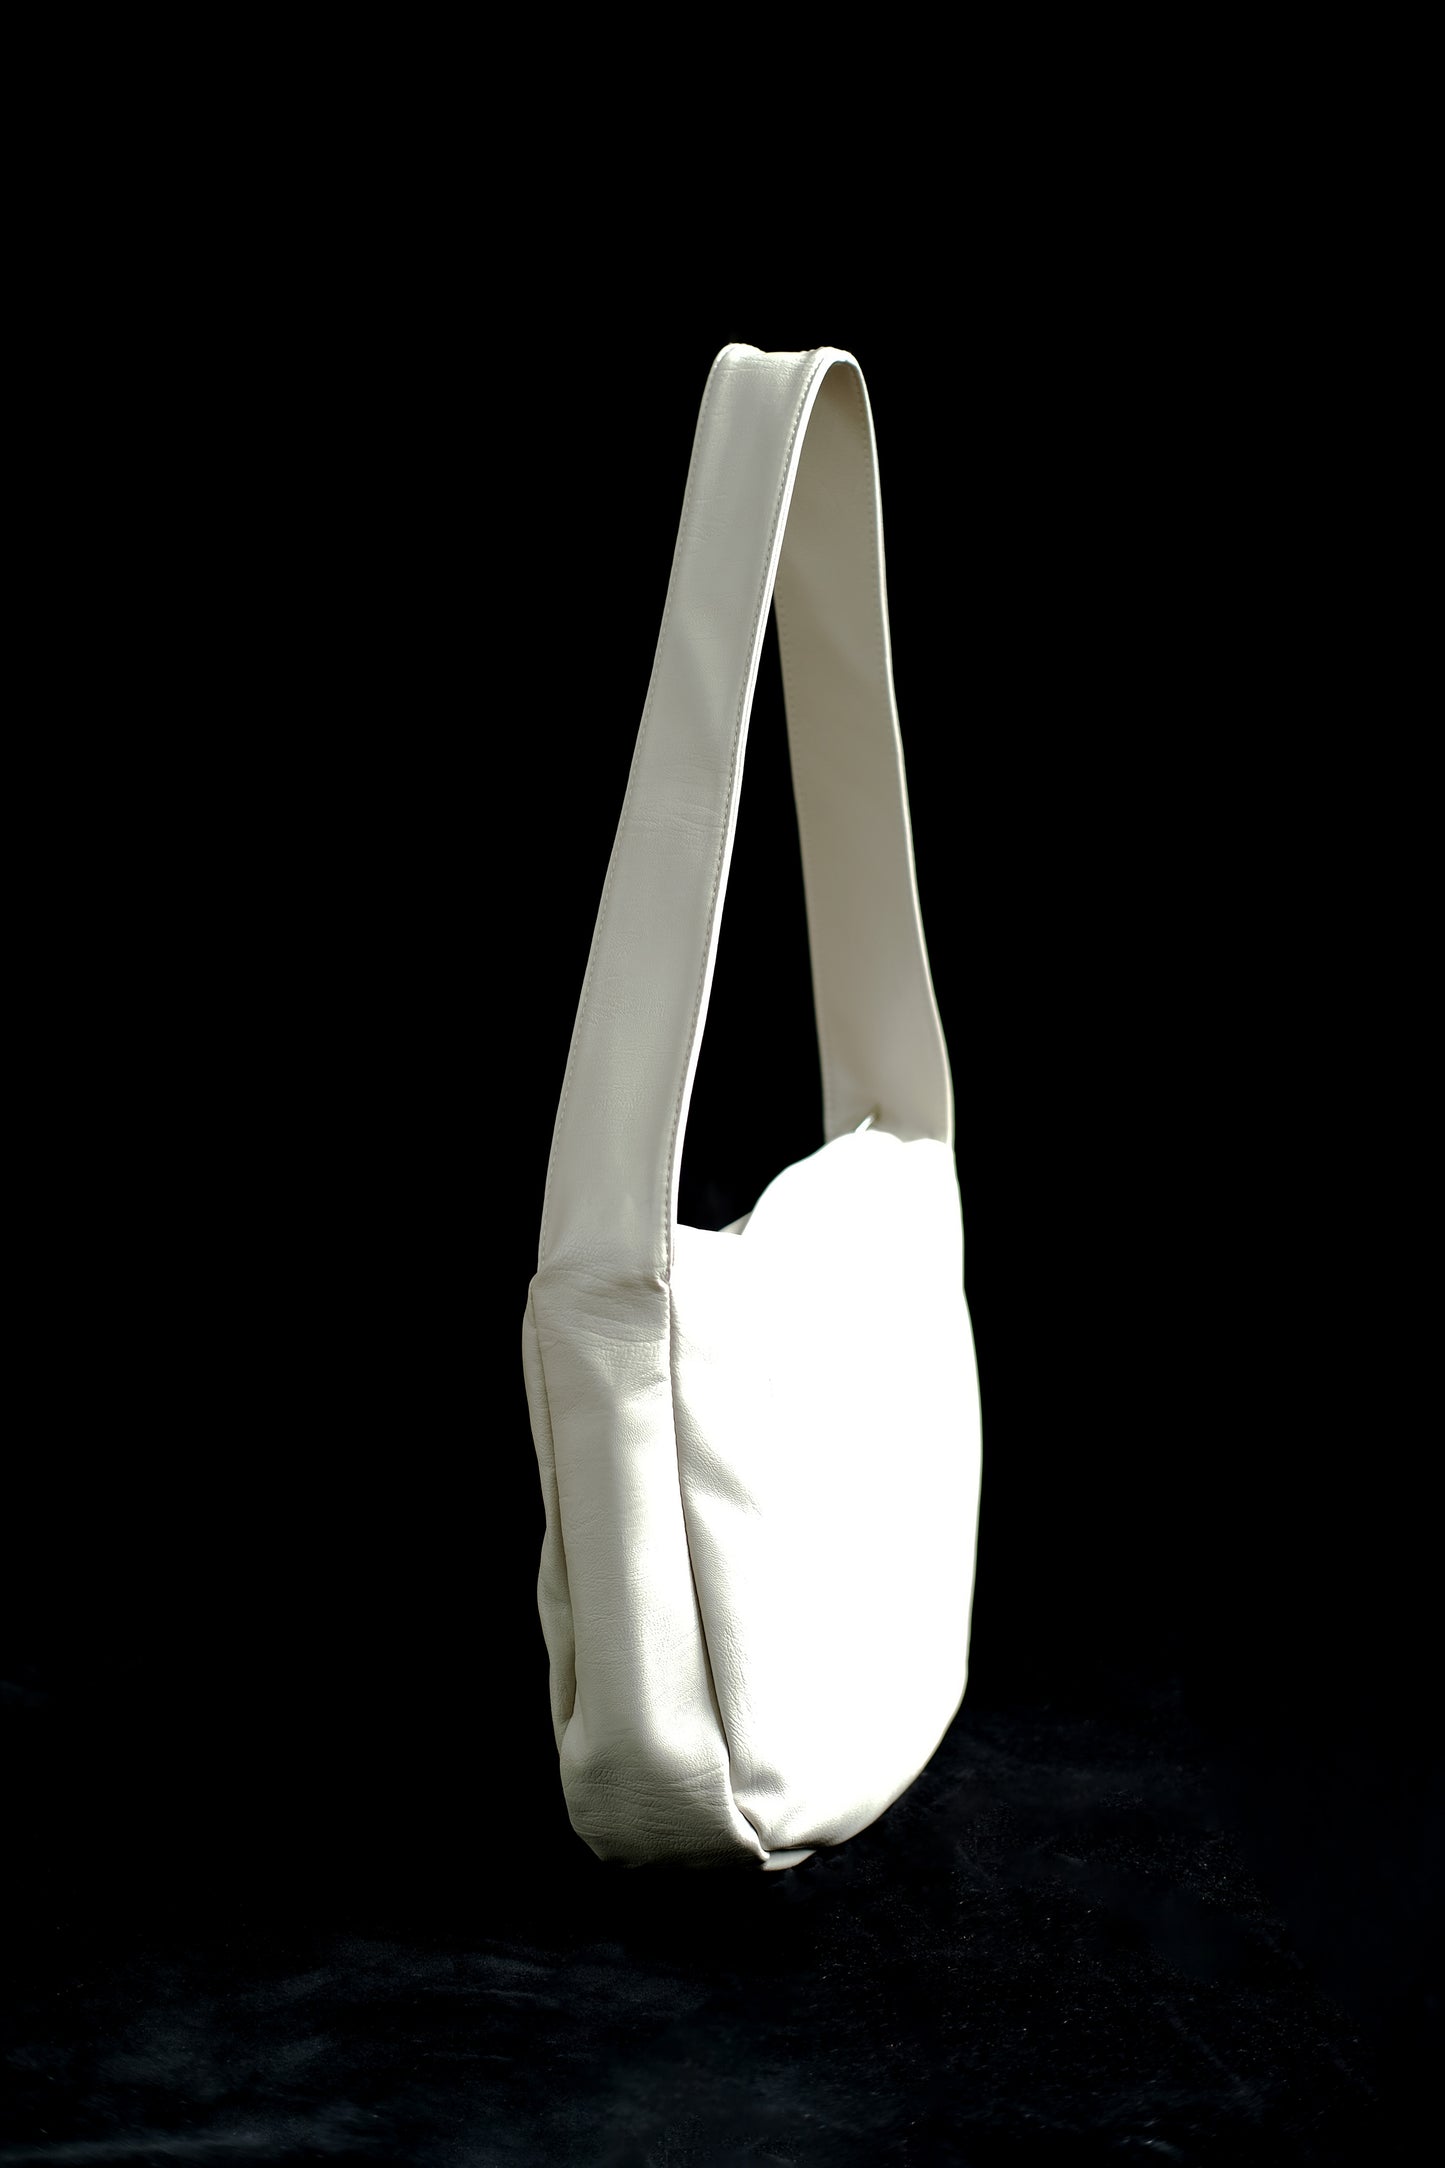 Premium soft leather shoulder bag in cream white